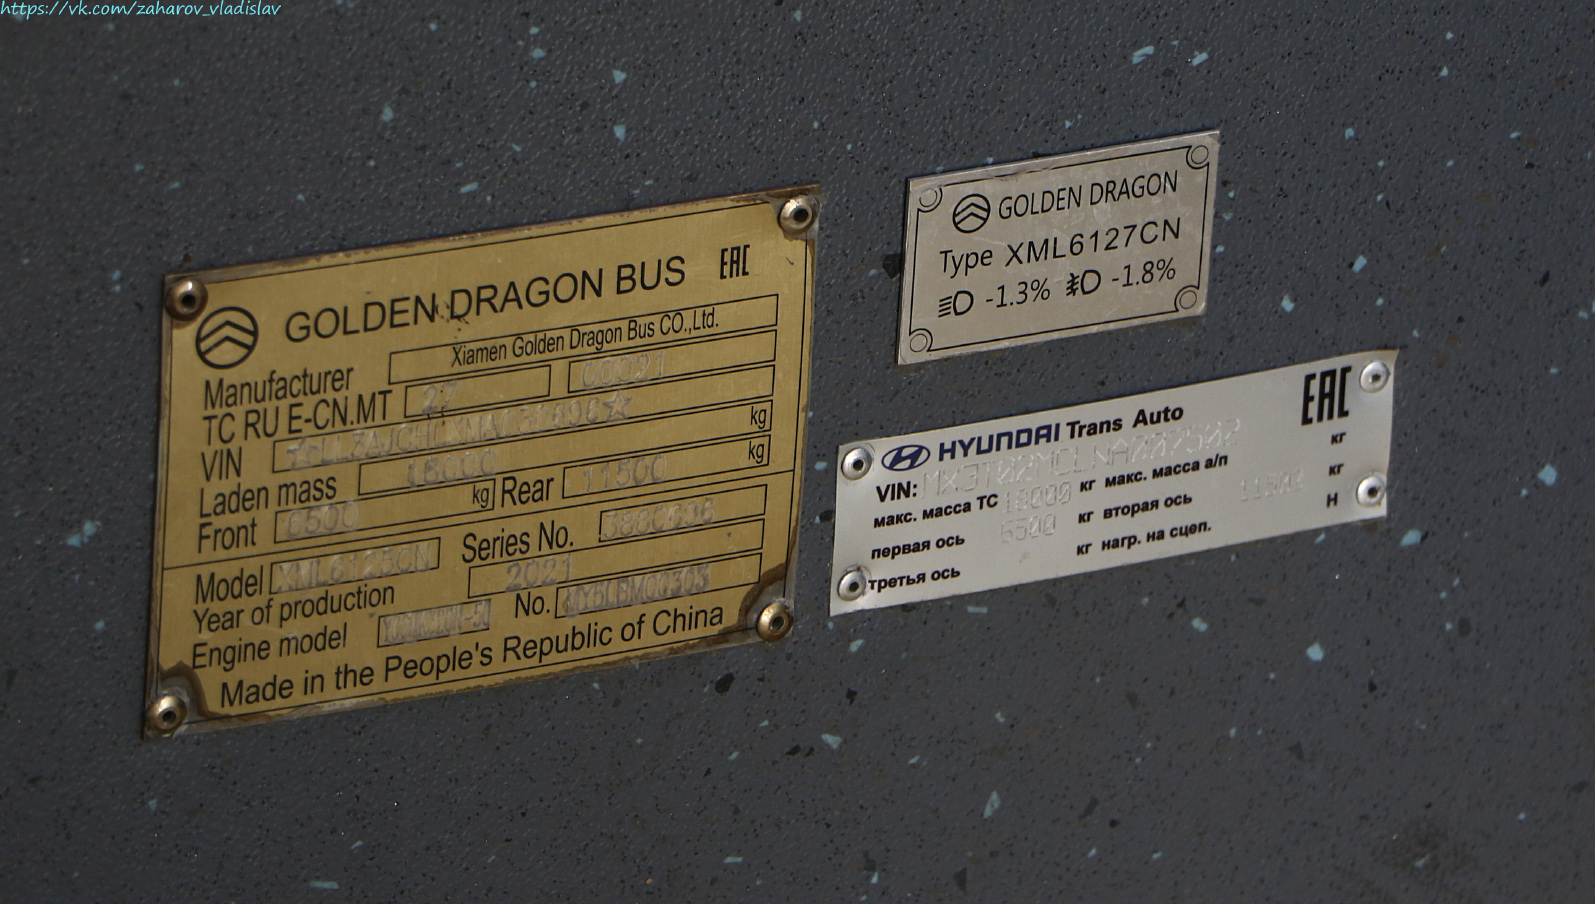 Алматы, Golden Dragon XML6125CN (Hyundai Trans Auto) № 3904